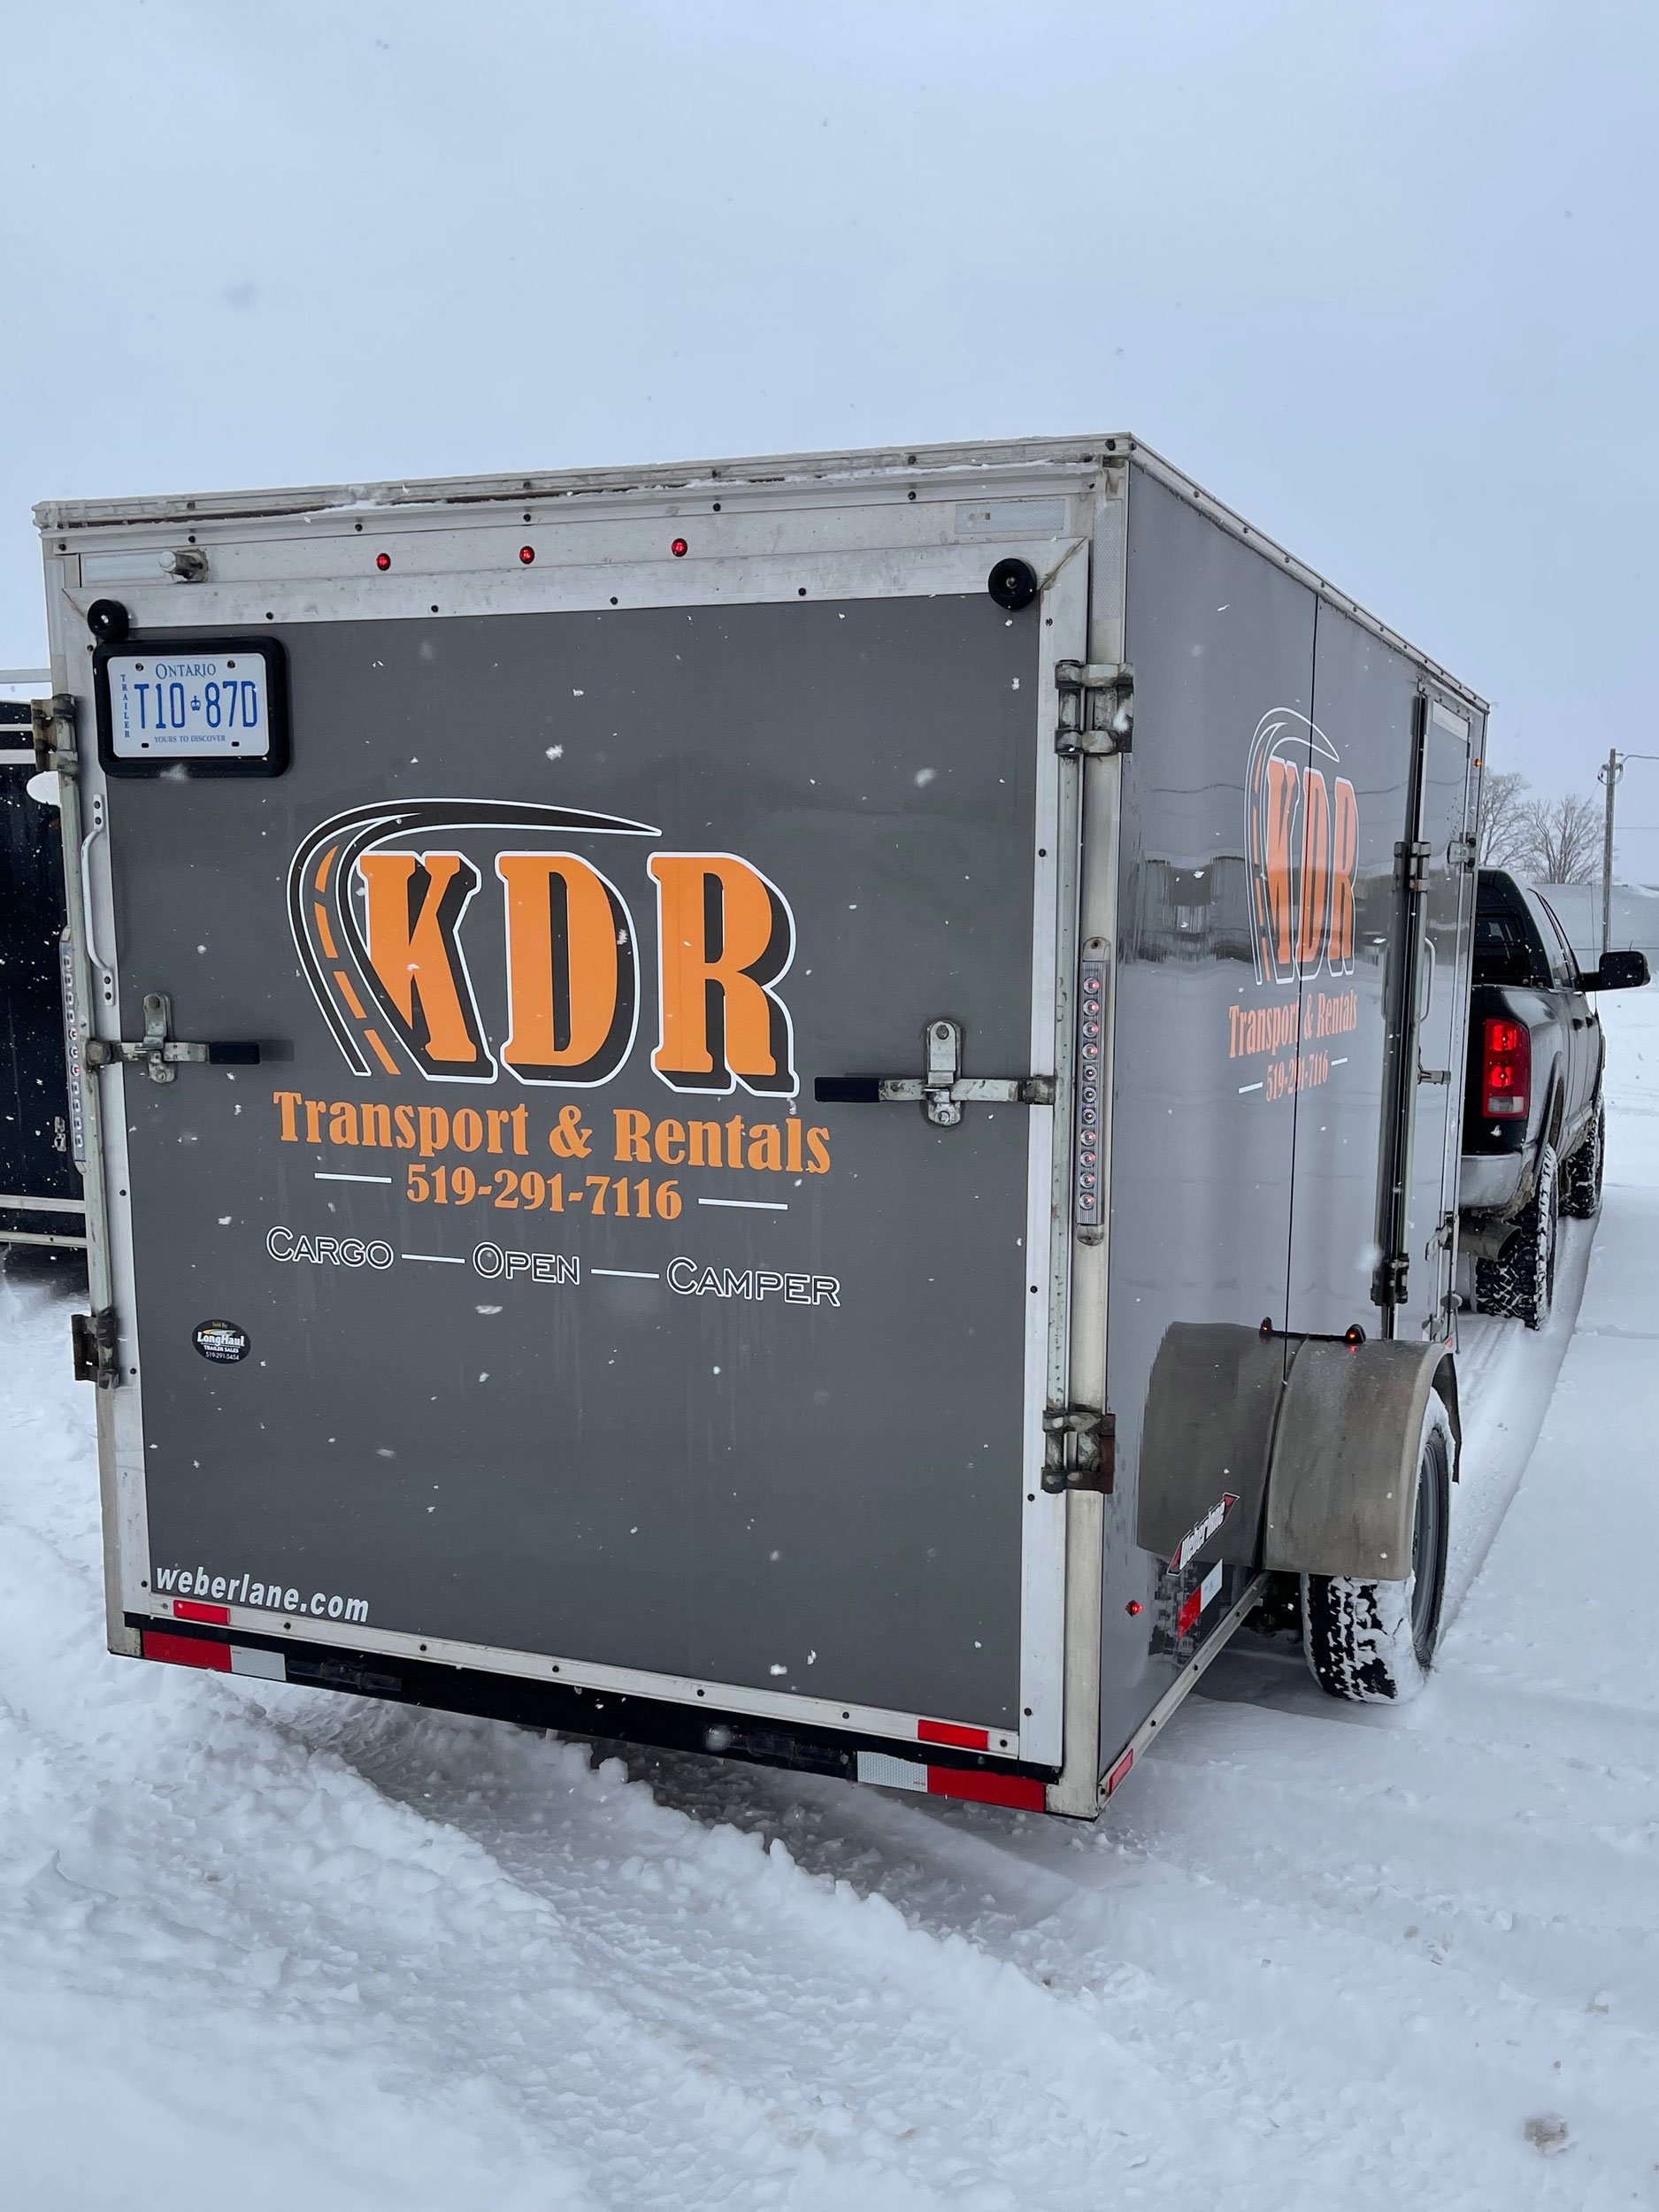 back-2-enclosed-trailer-6x12-kdr-transport-rentals-north-perth-ontario.jpg